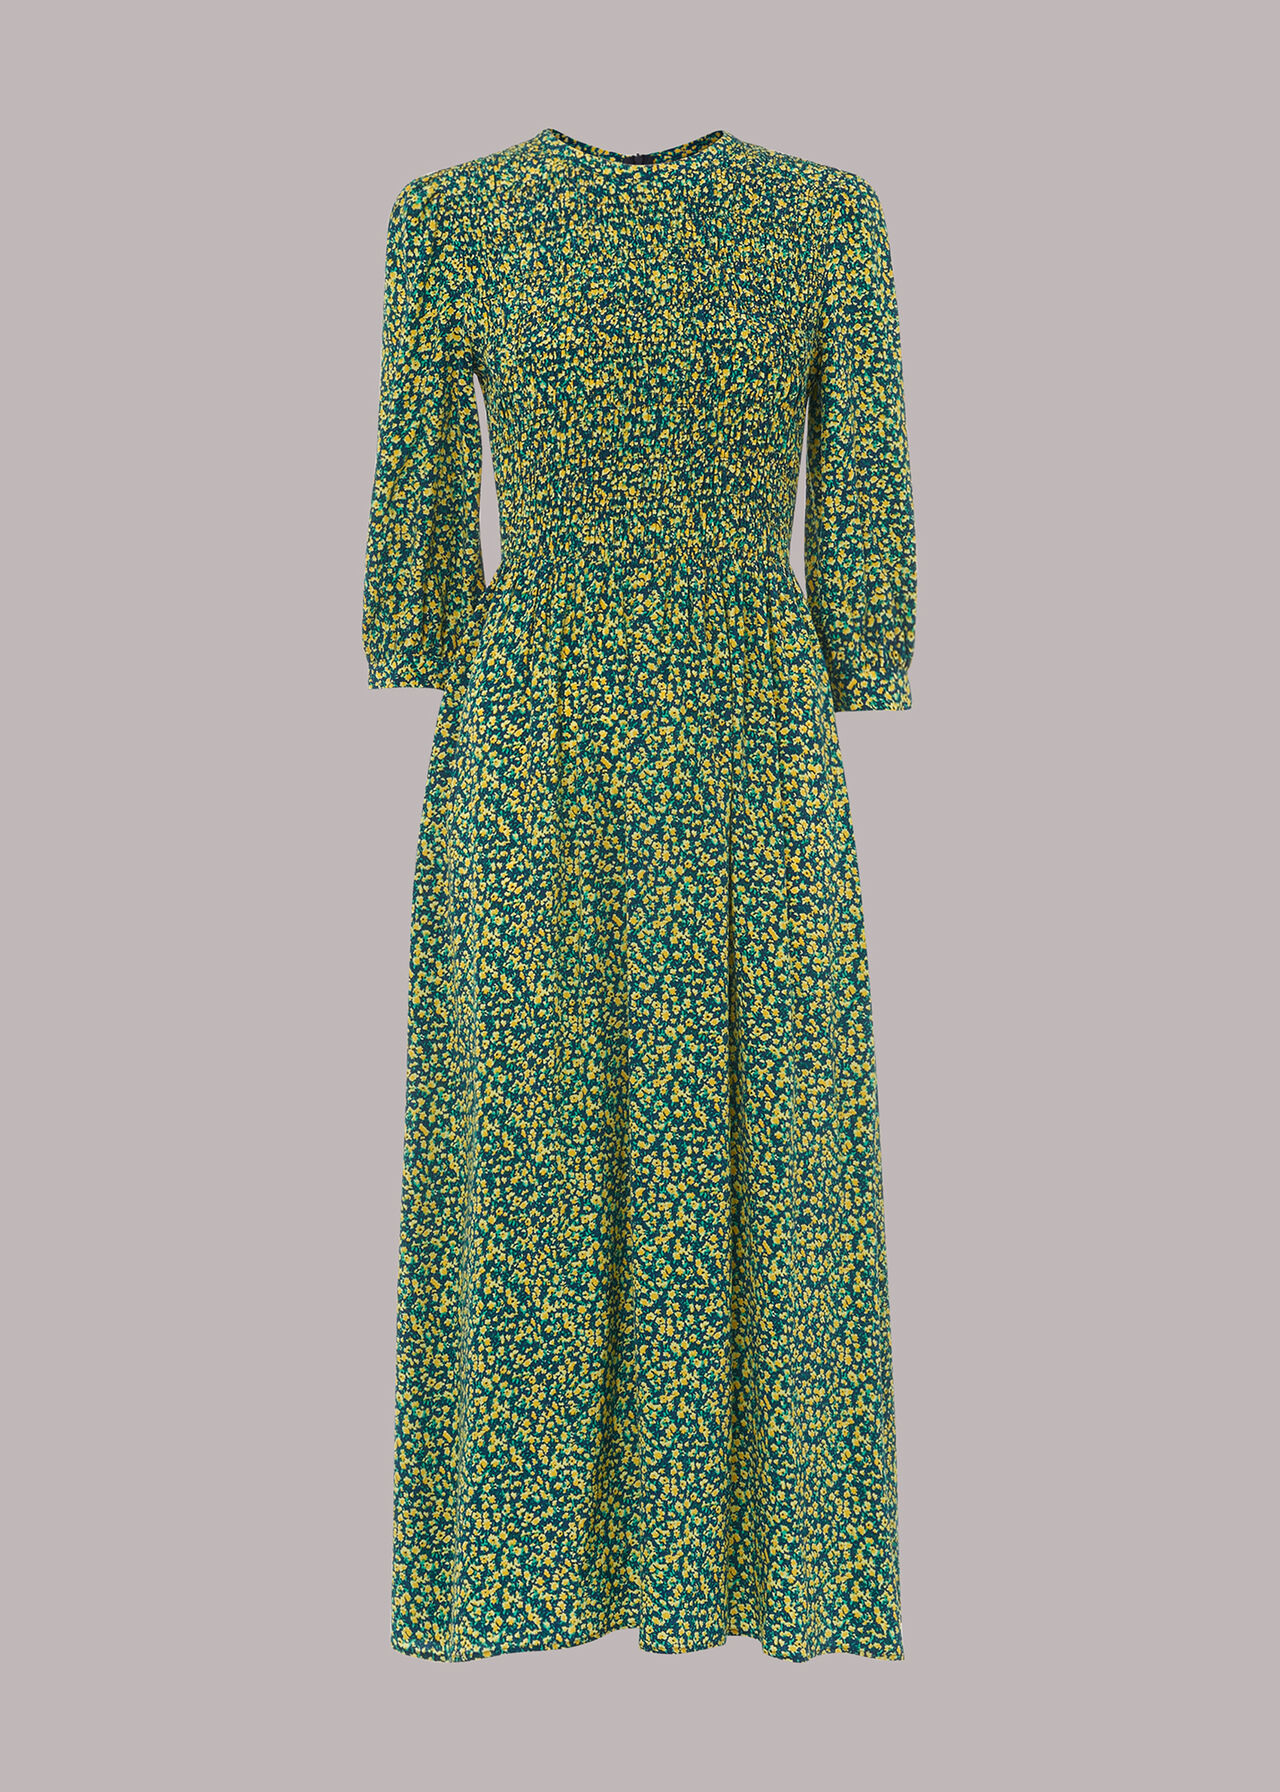 JL Ditsy Sunflower Print Dress